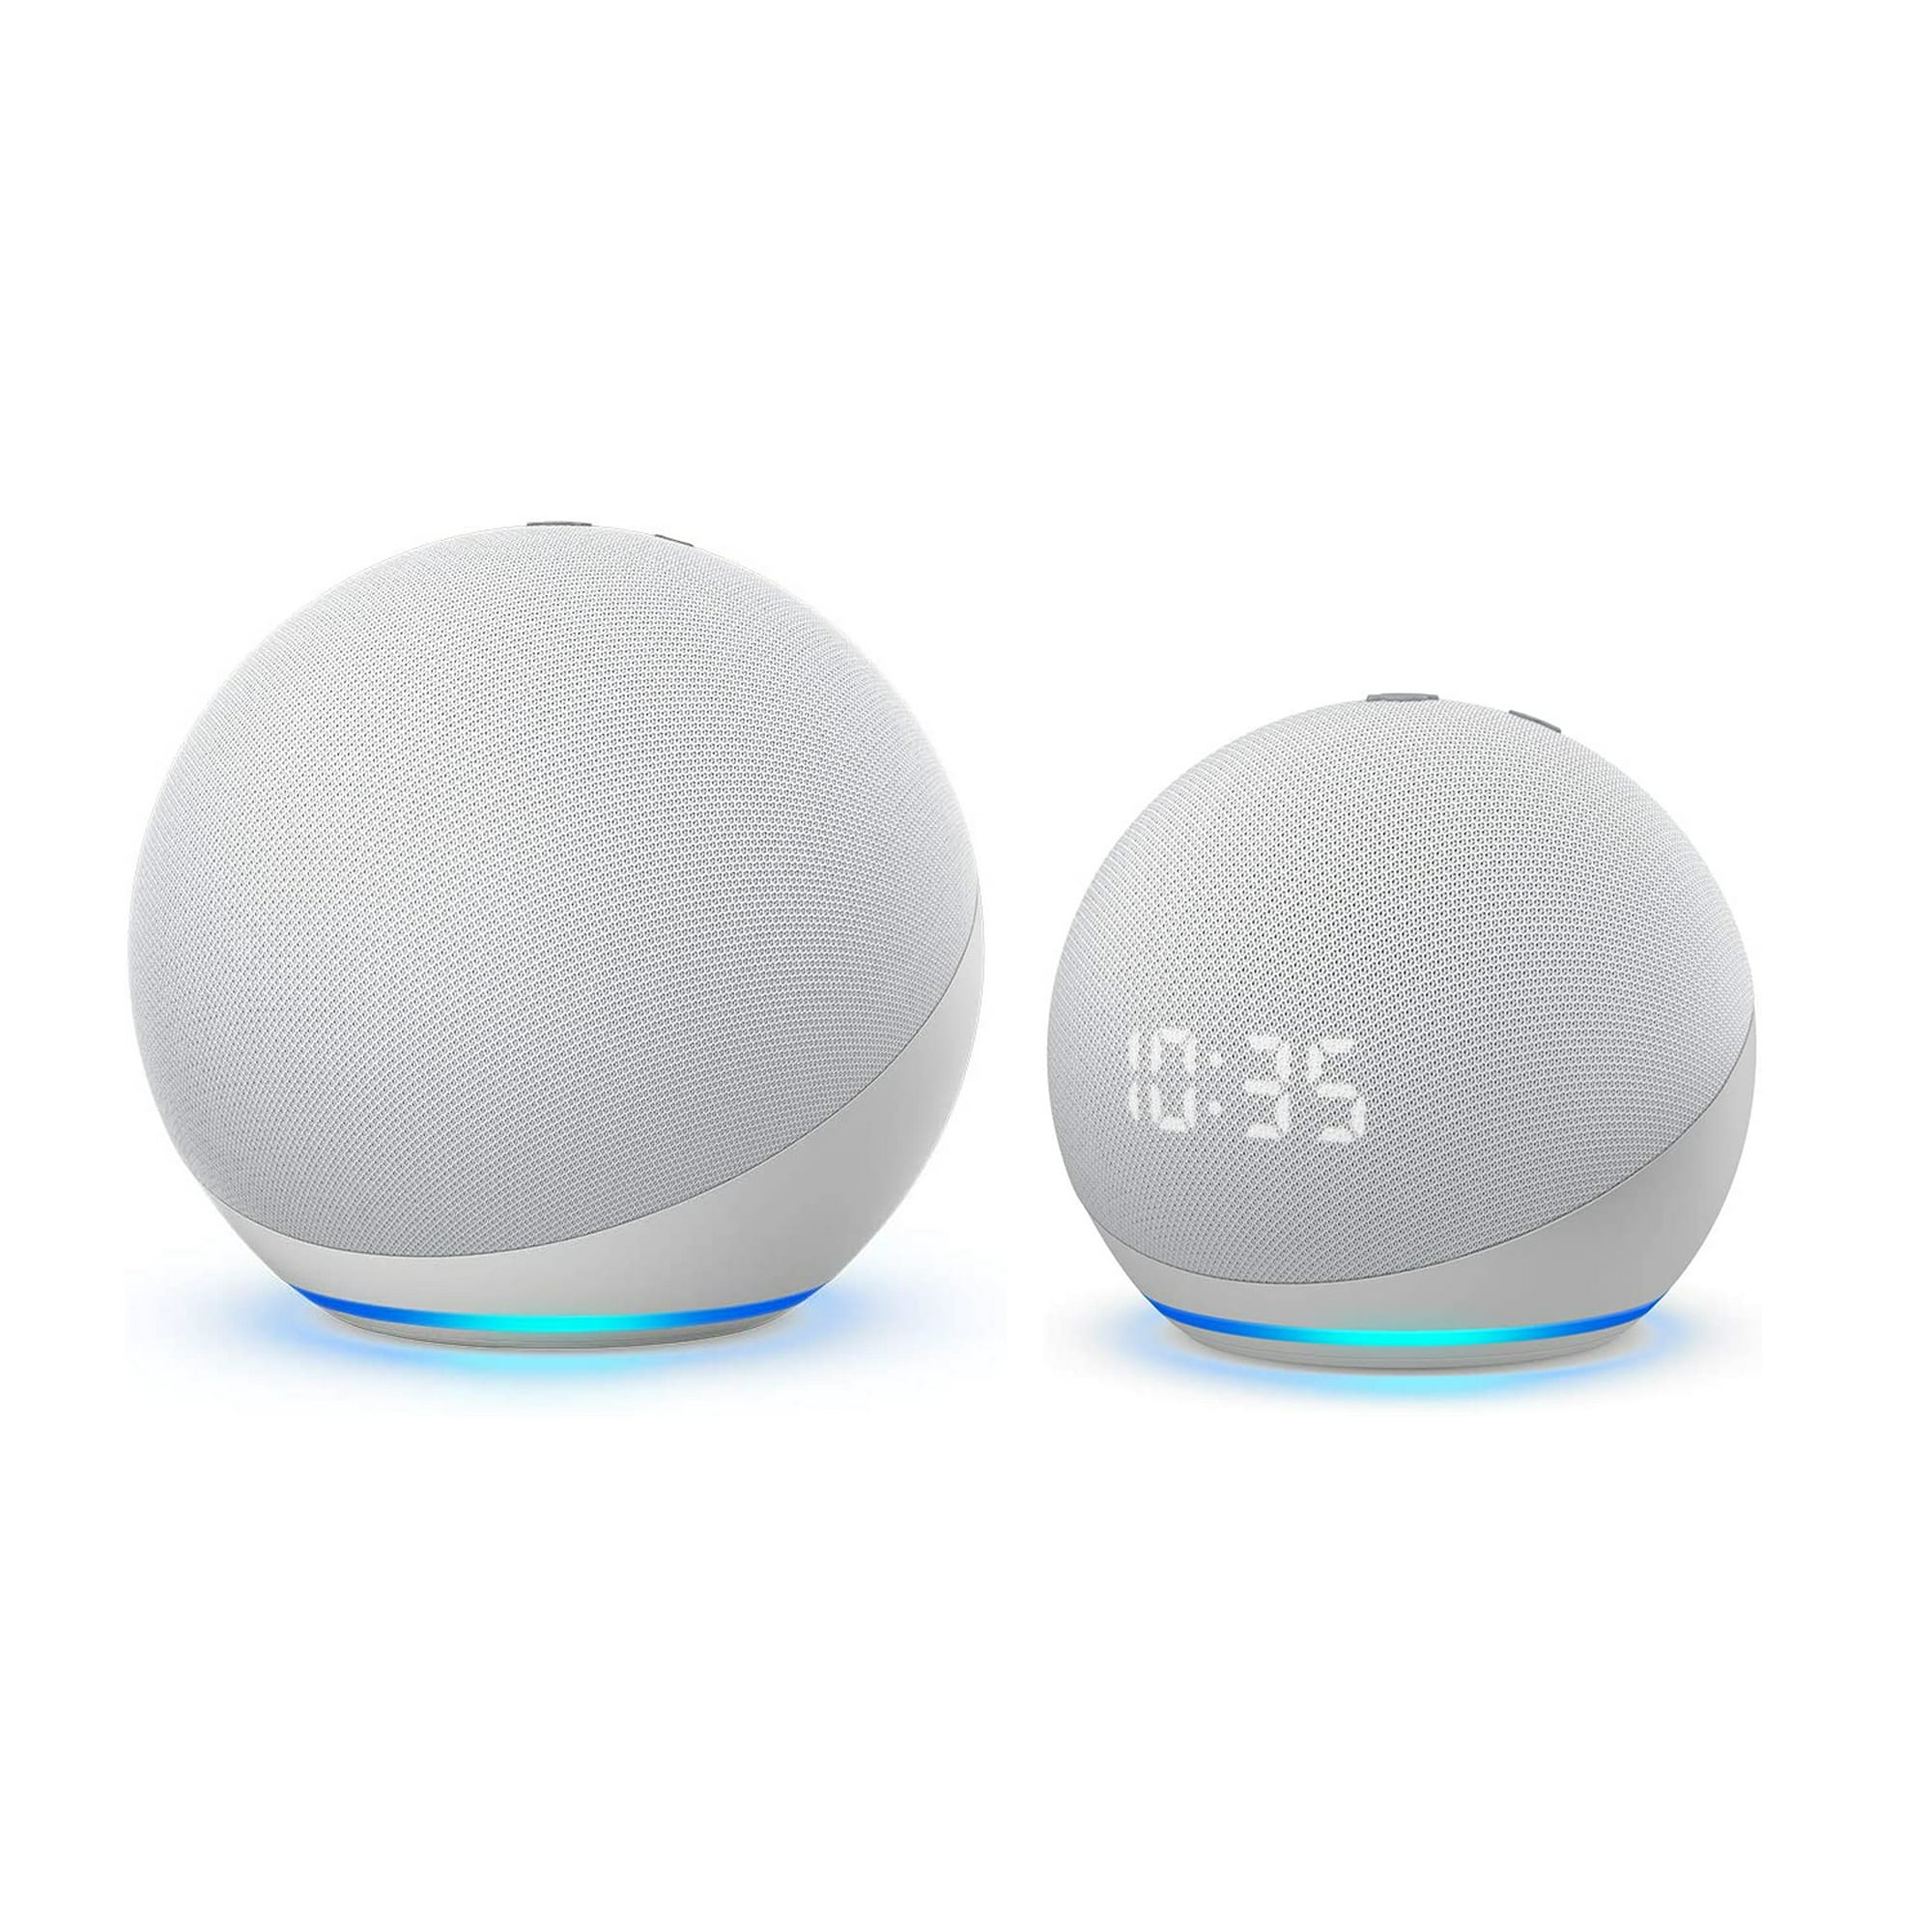 Echo Dot 4ta generación – Blanco – Miamitek